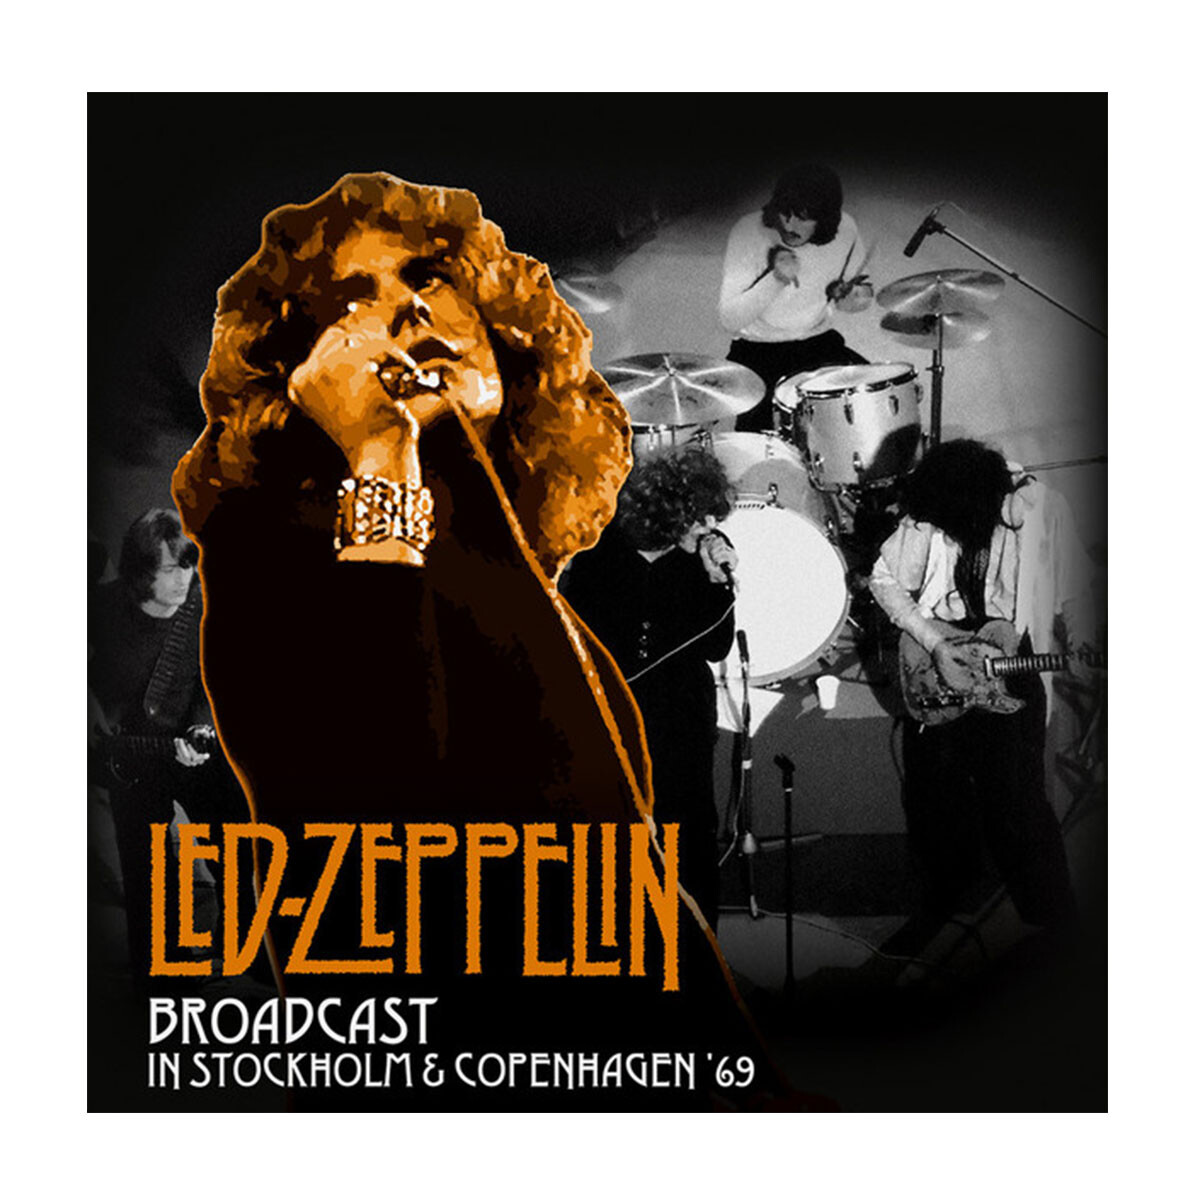 Led Zeppelinbroadcast In Stockholm And Copenhagenlp 